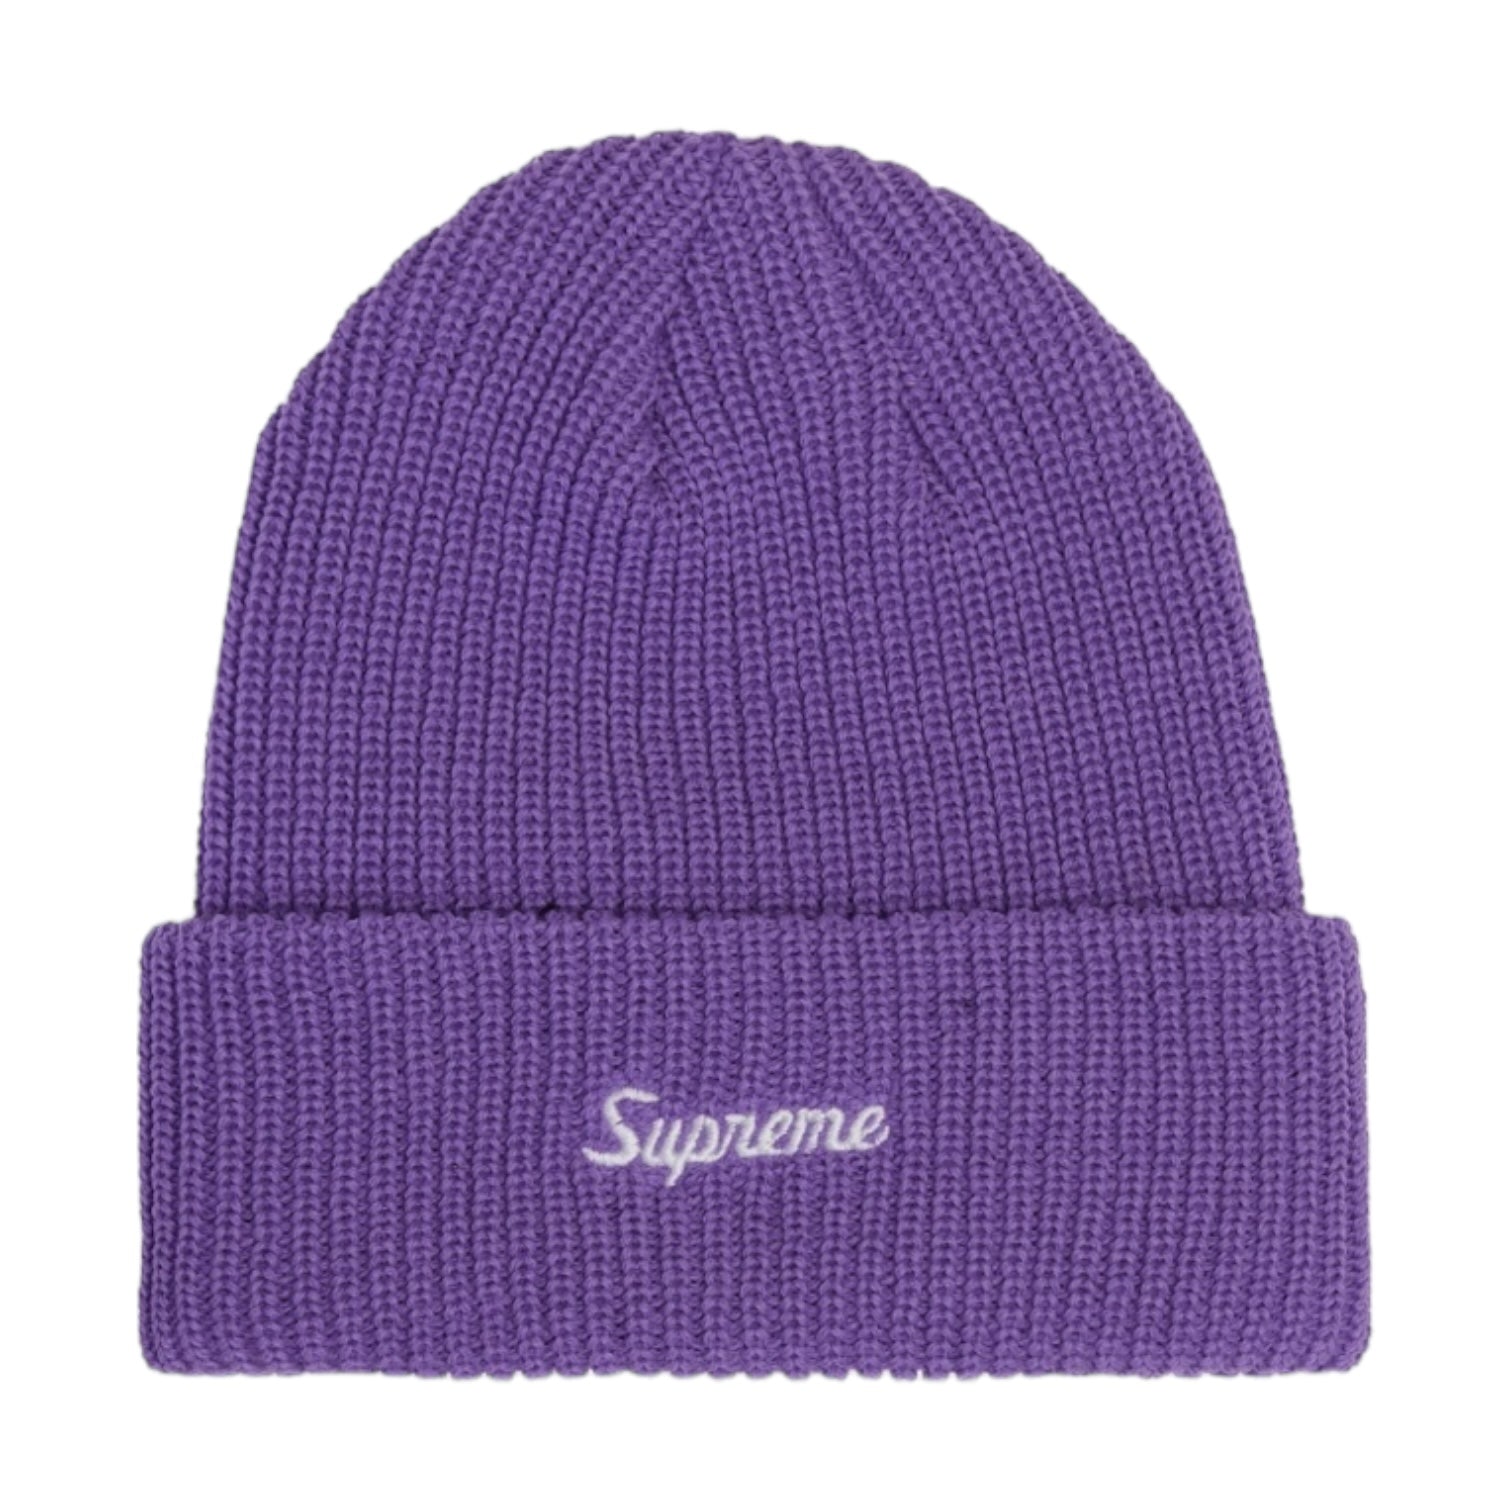 Supreme Loose Gauge Knit Beanie Purple - Supreme Knit Beanie